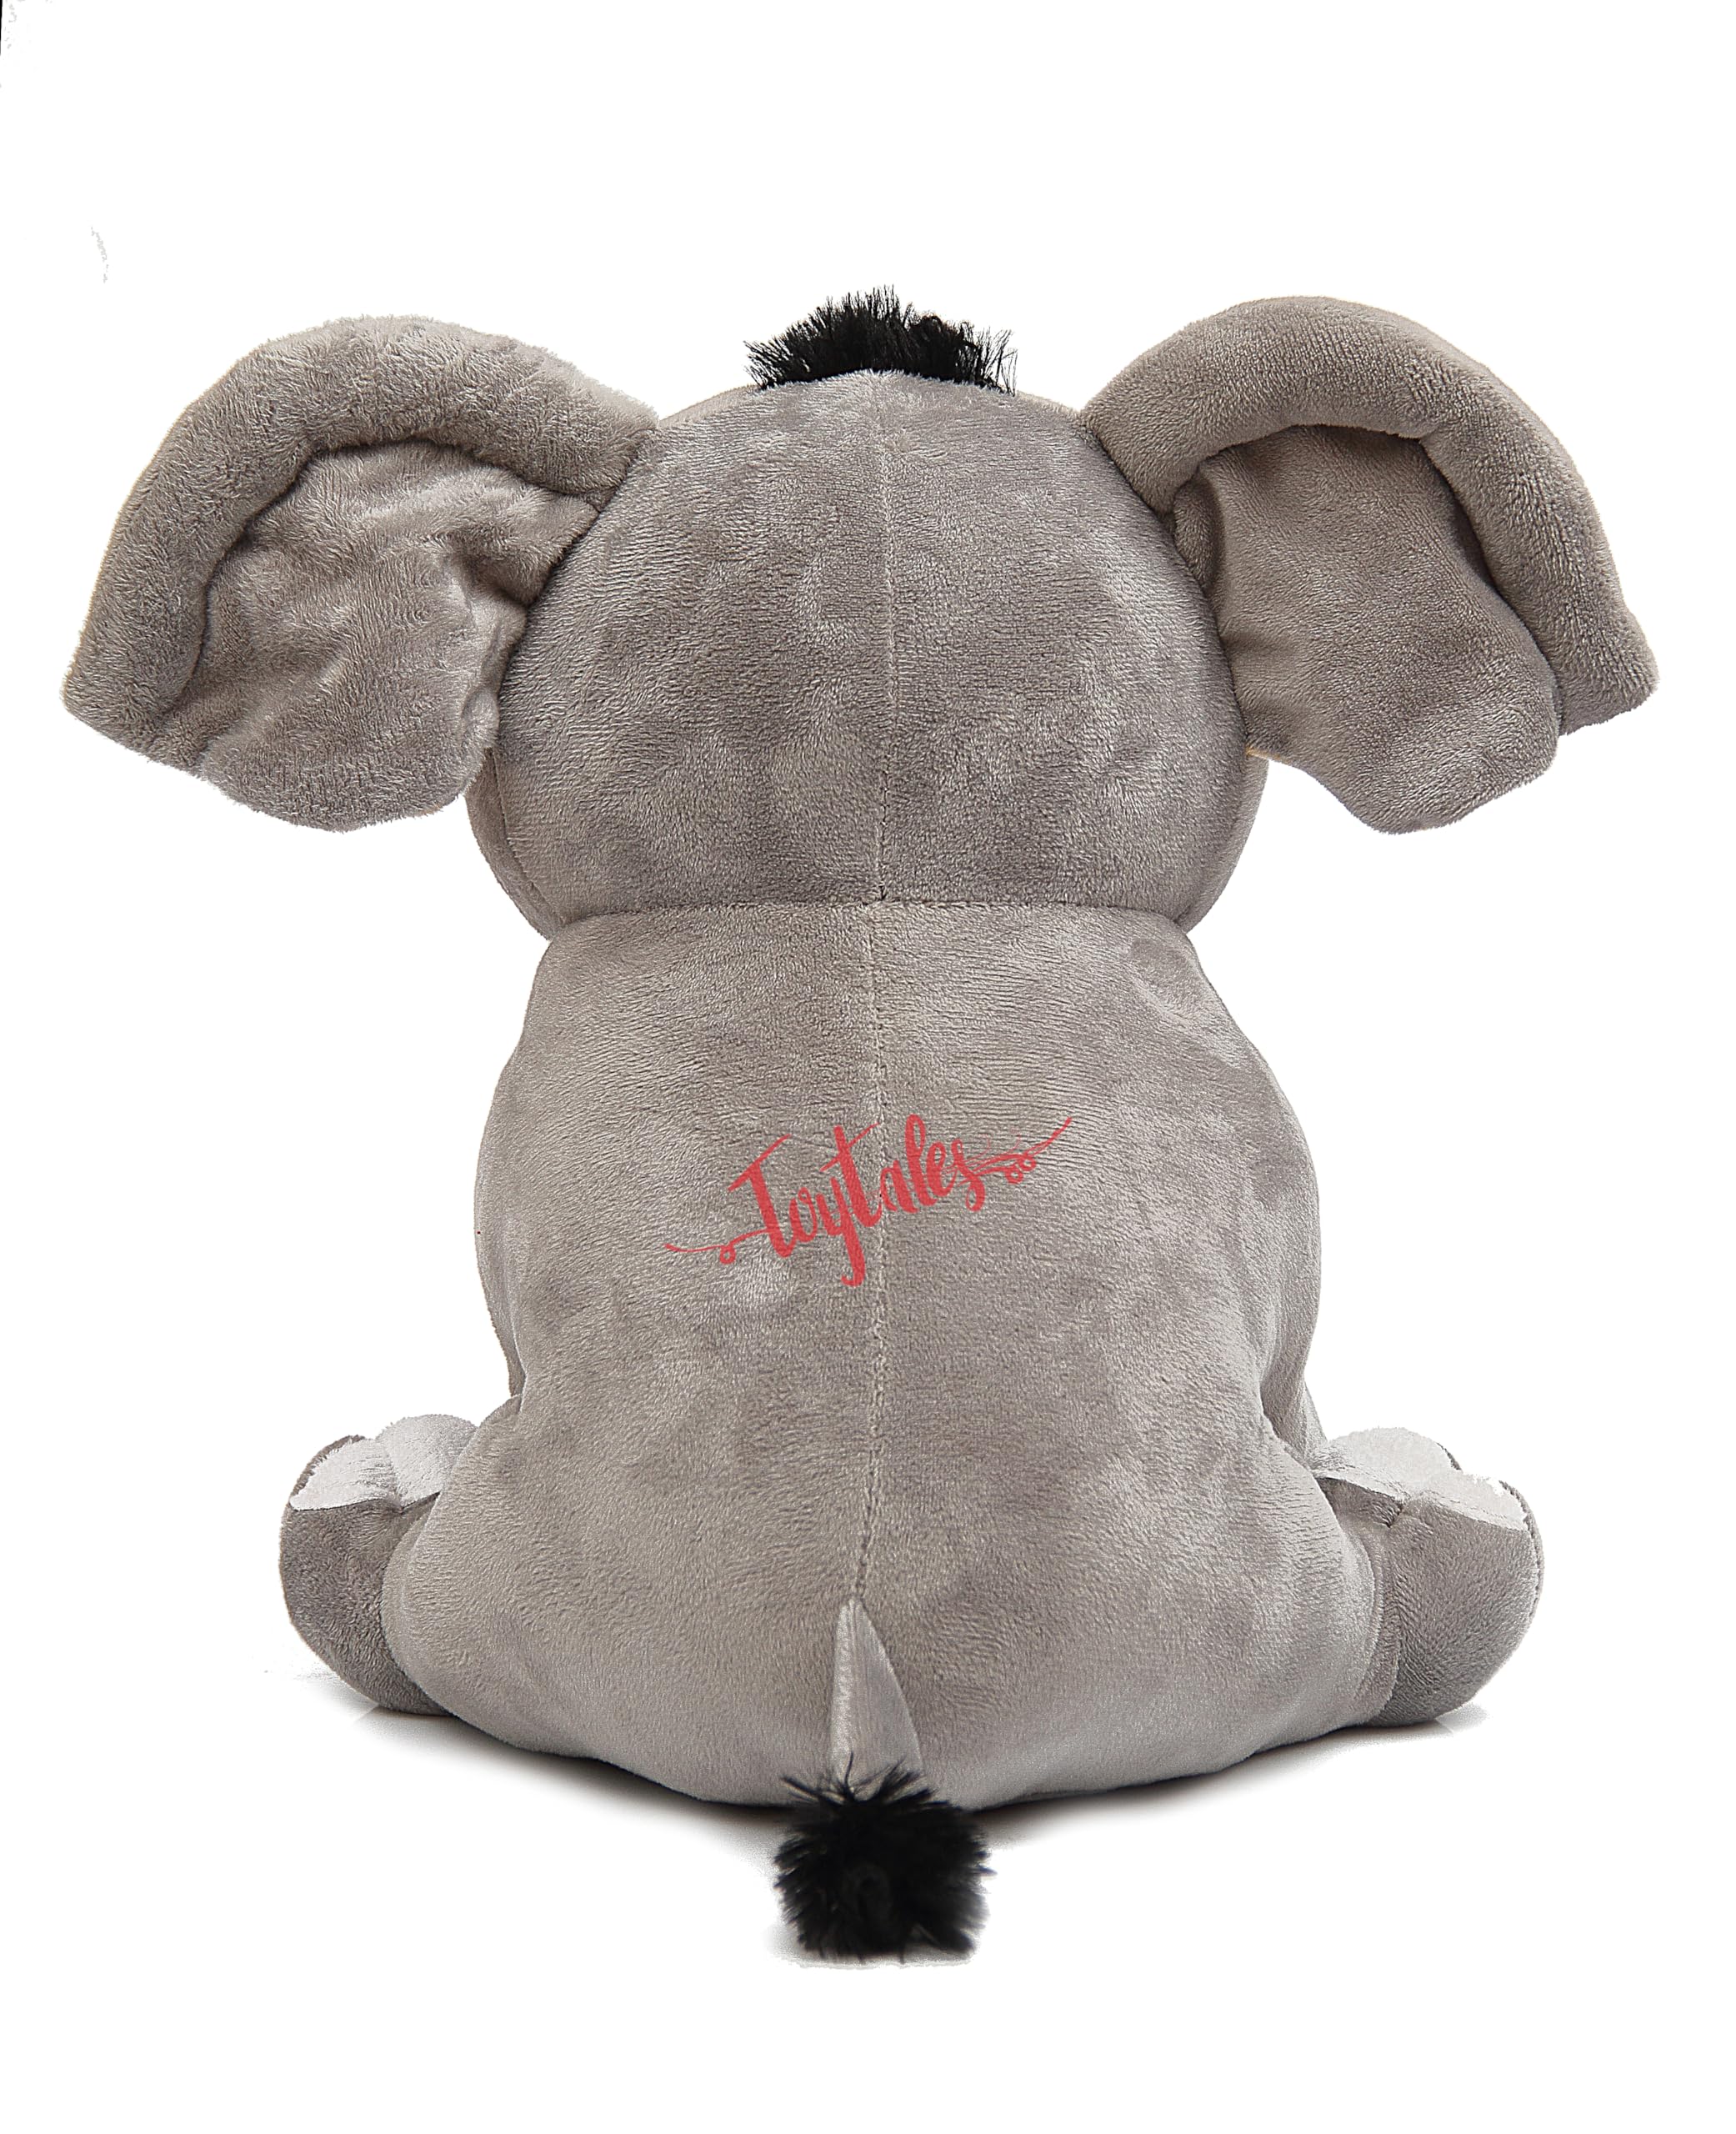 Stuffed Elephant with Monkey Plush Toy, Cute Huggable Shape Animal Stuffed Toy, Soft & Cuddly, for Kids, Boys & Girls, Best Birthday Gift Idea - 30cm (Grey/Brown)